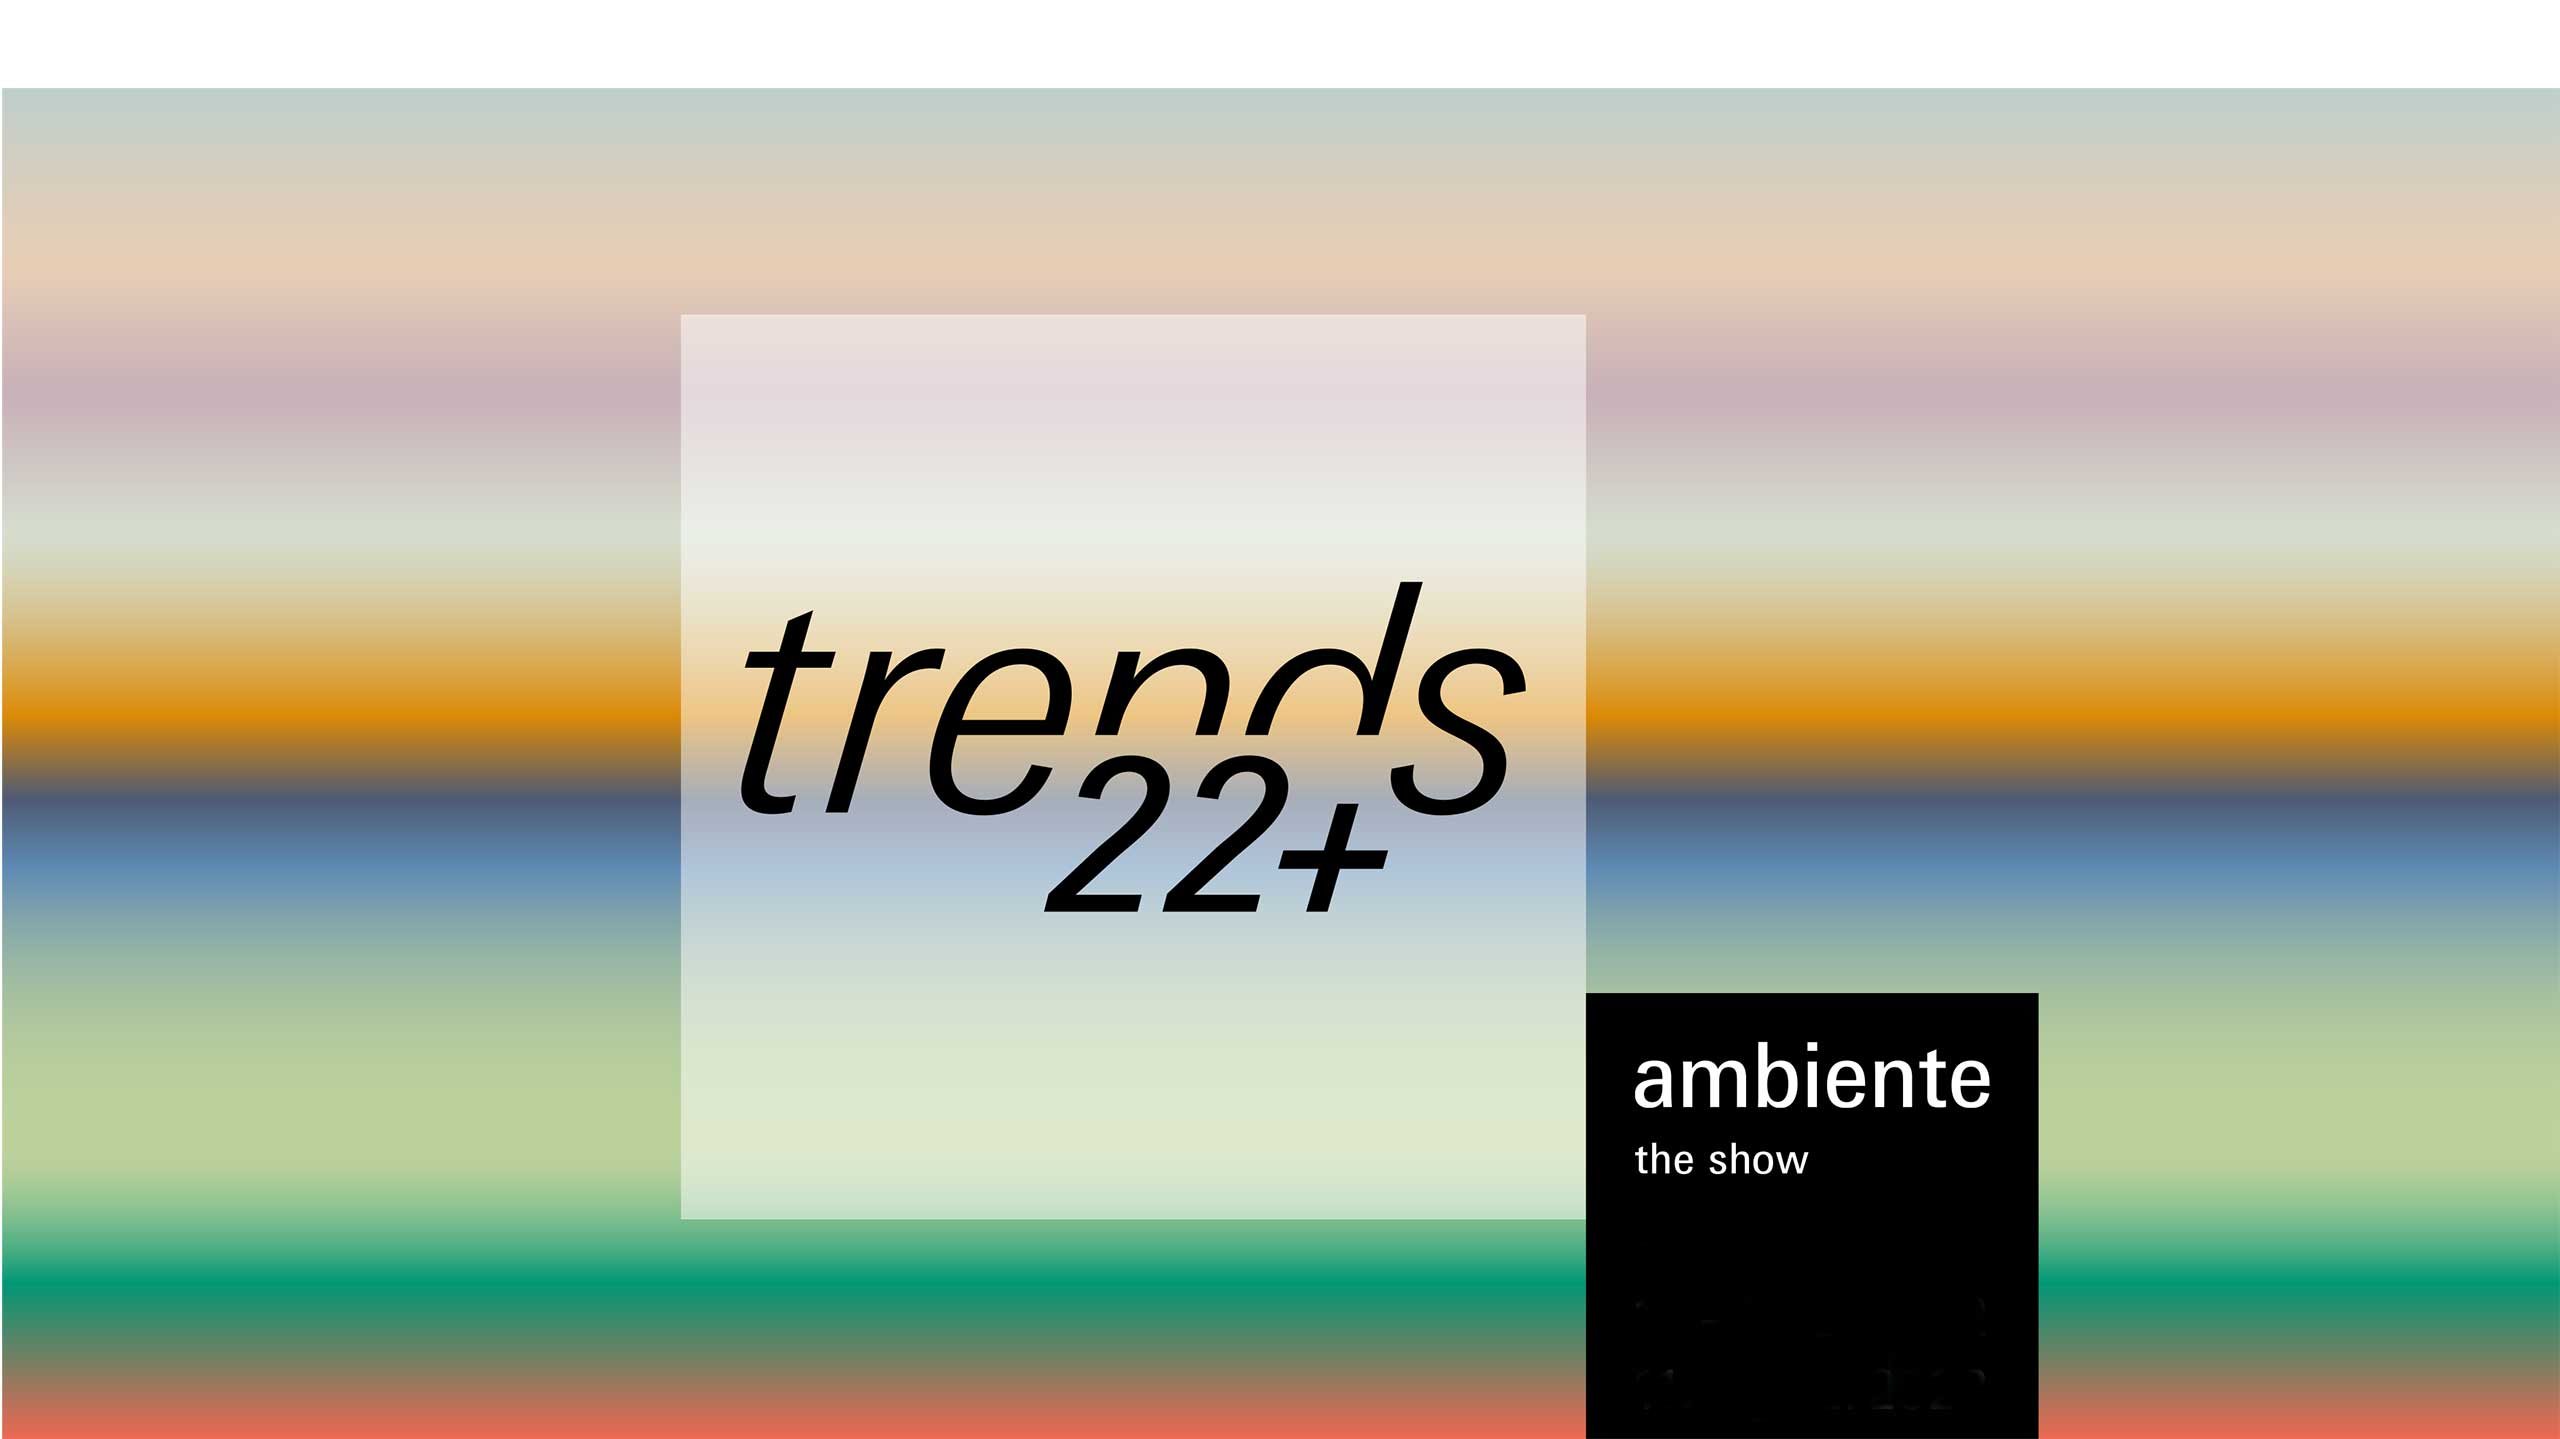 Ambiente Trends 22+